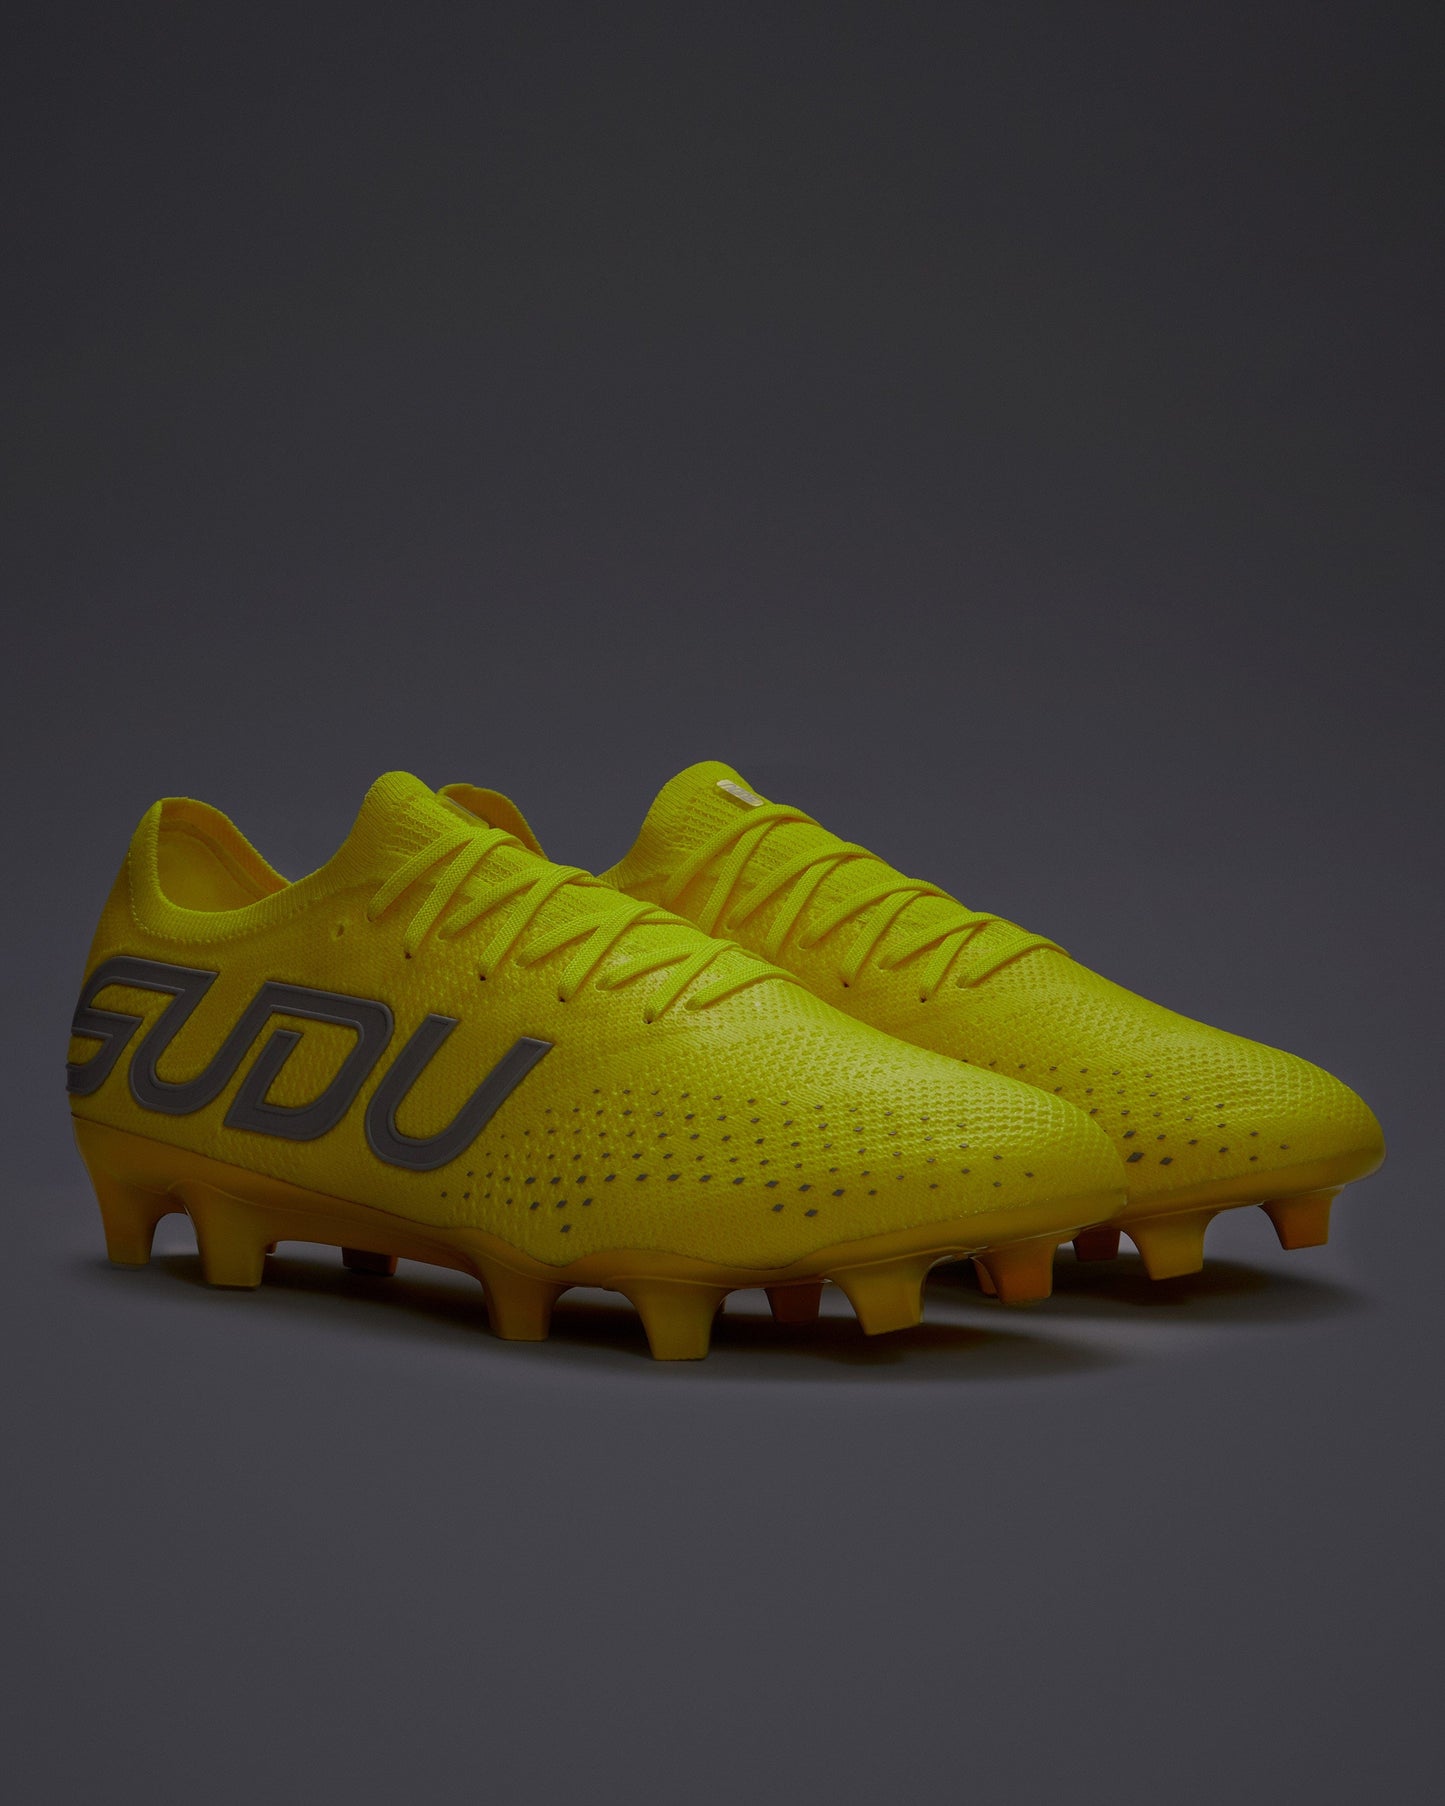 SUDU SFS FG 01+ Pro football boots - Yellow Football Boots